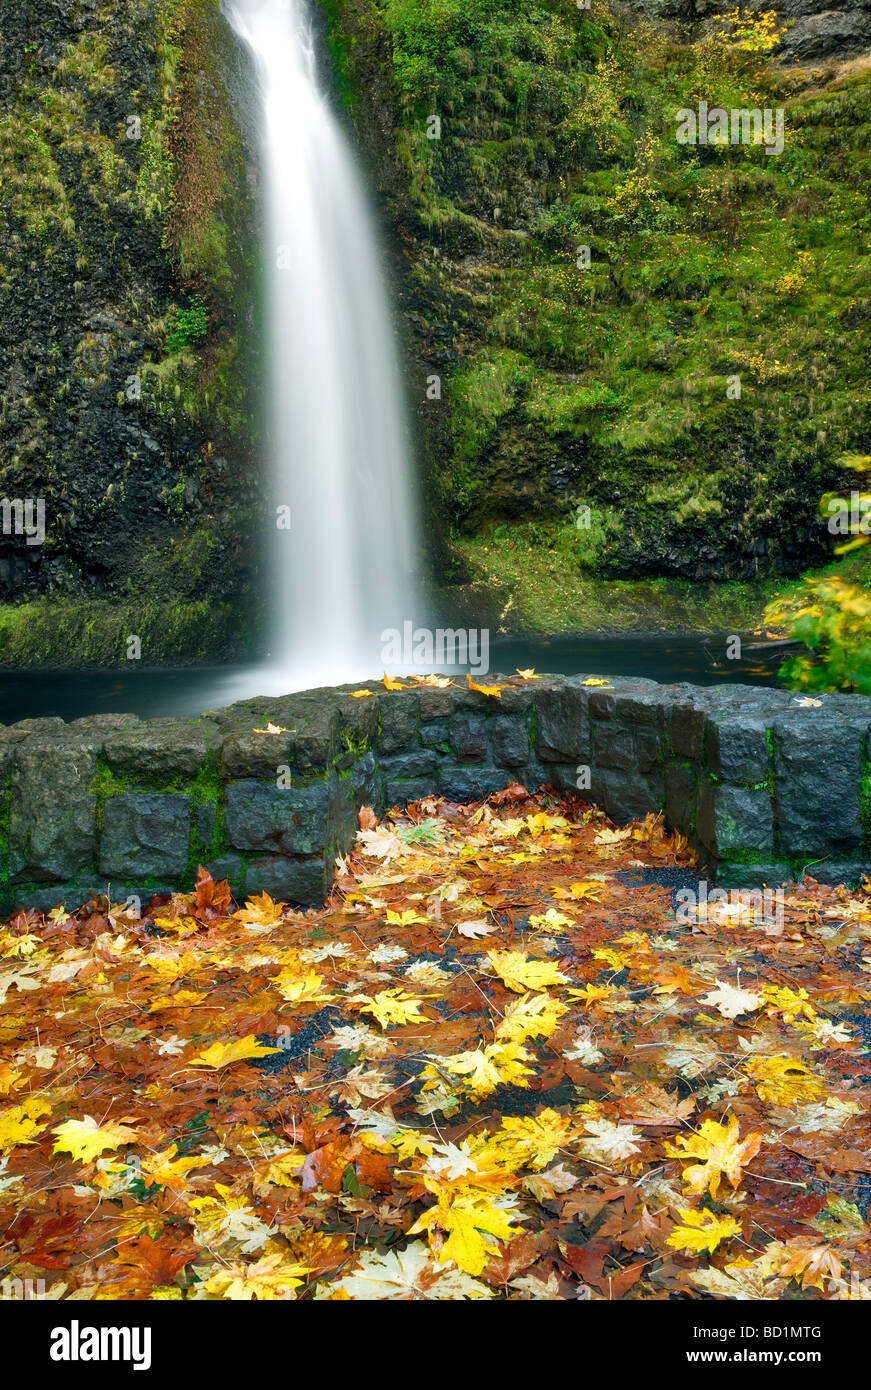 Schachtelhalm fällt und Felsenpfad mit farbigen Ahorn Herbst Blätter Columbia River Gorge National Scenics Area Oregon Stockfoto